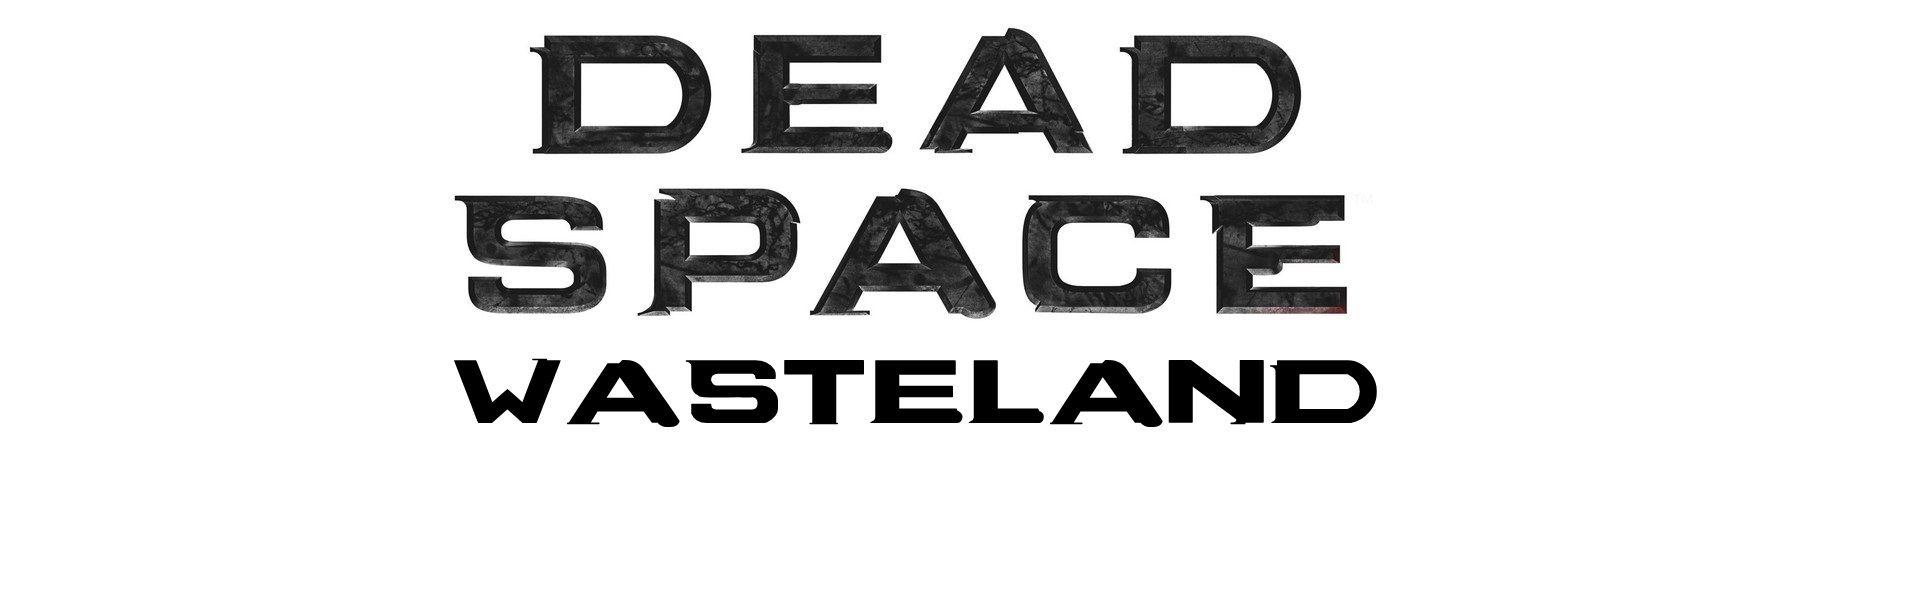 Dead Space Logo - User blog:The spy1/Dead Space 3 prequel | Dead Space Wiki | FANDOM ...